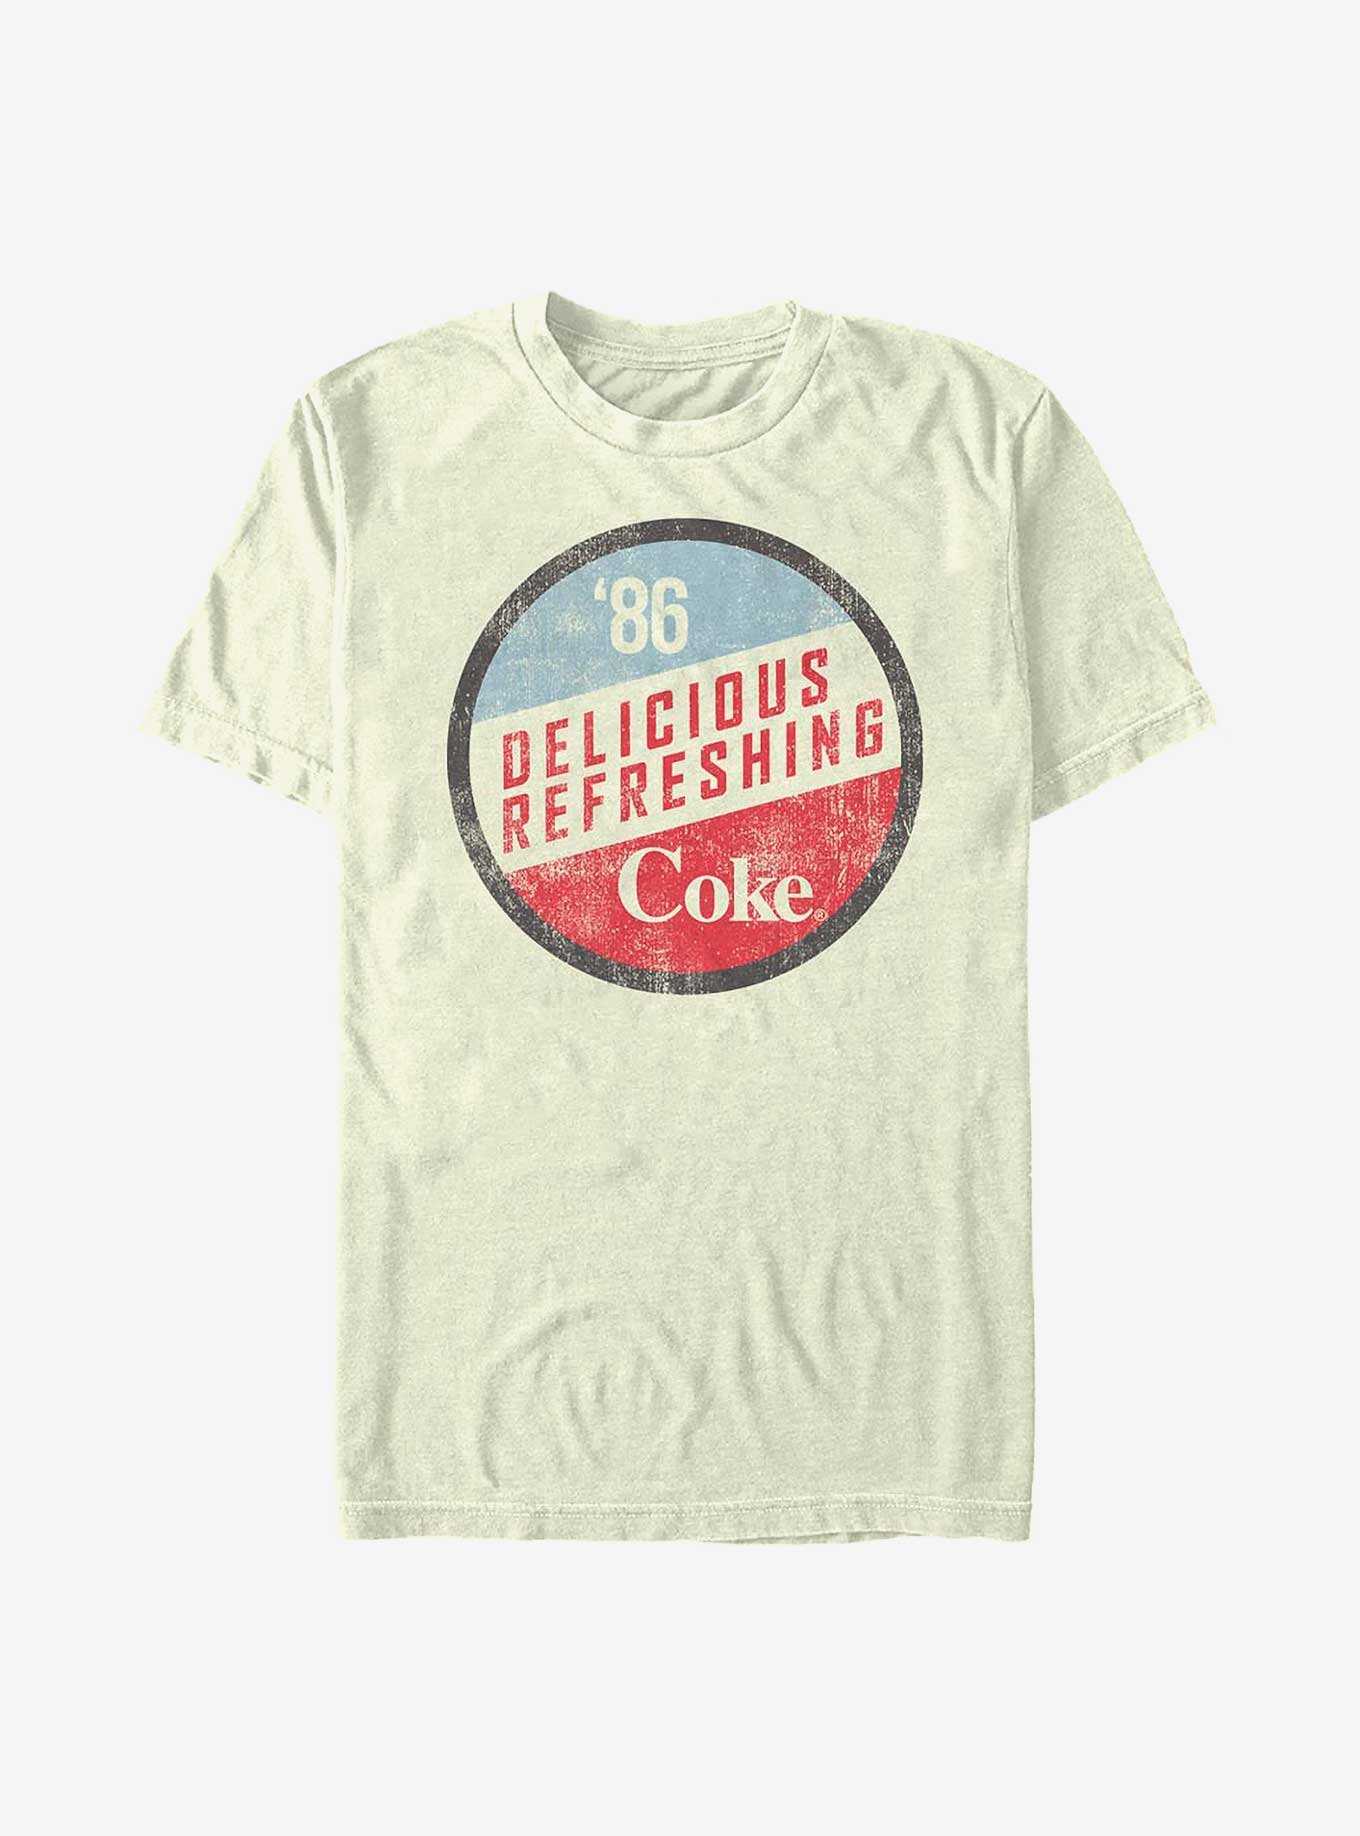 Coca-Cola '86 Delicious Refreshing T-Shirt, , hi-res